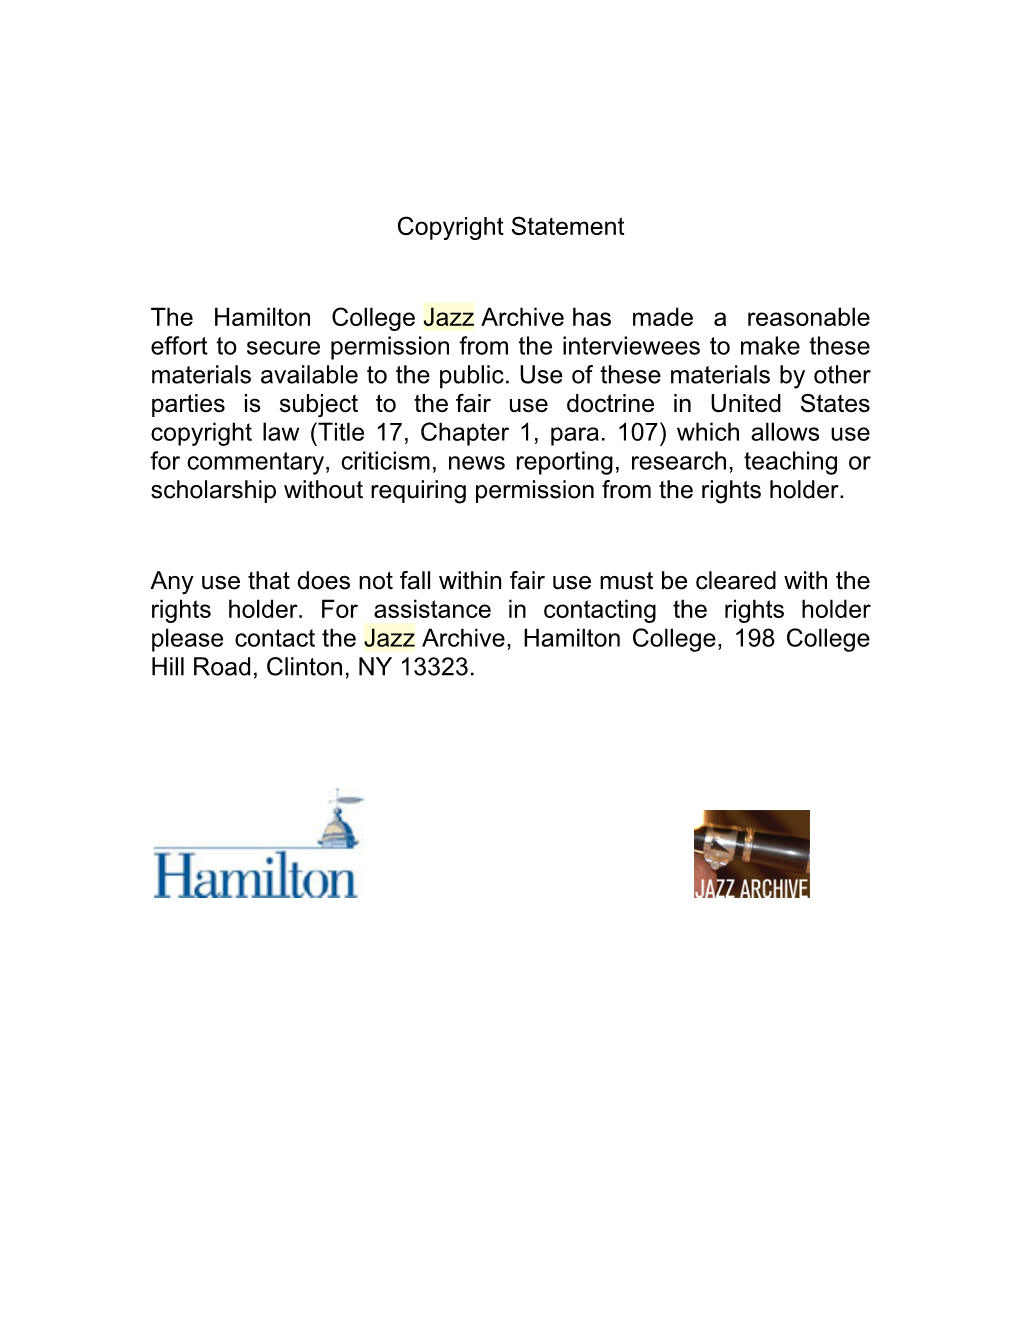 Copyright Statement the Hamilton College Jazz Archive